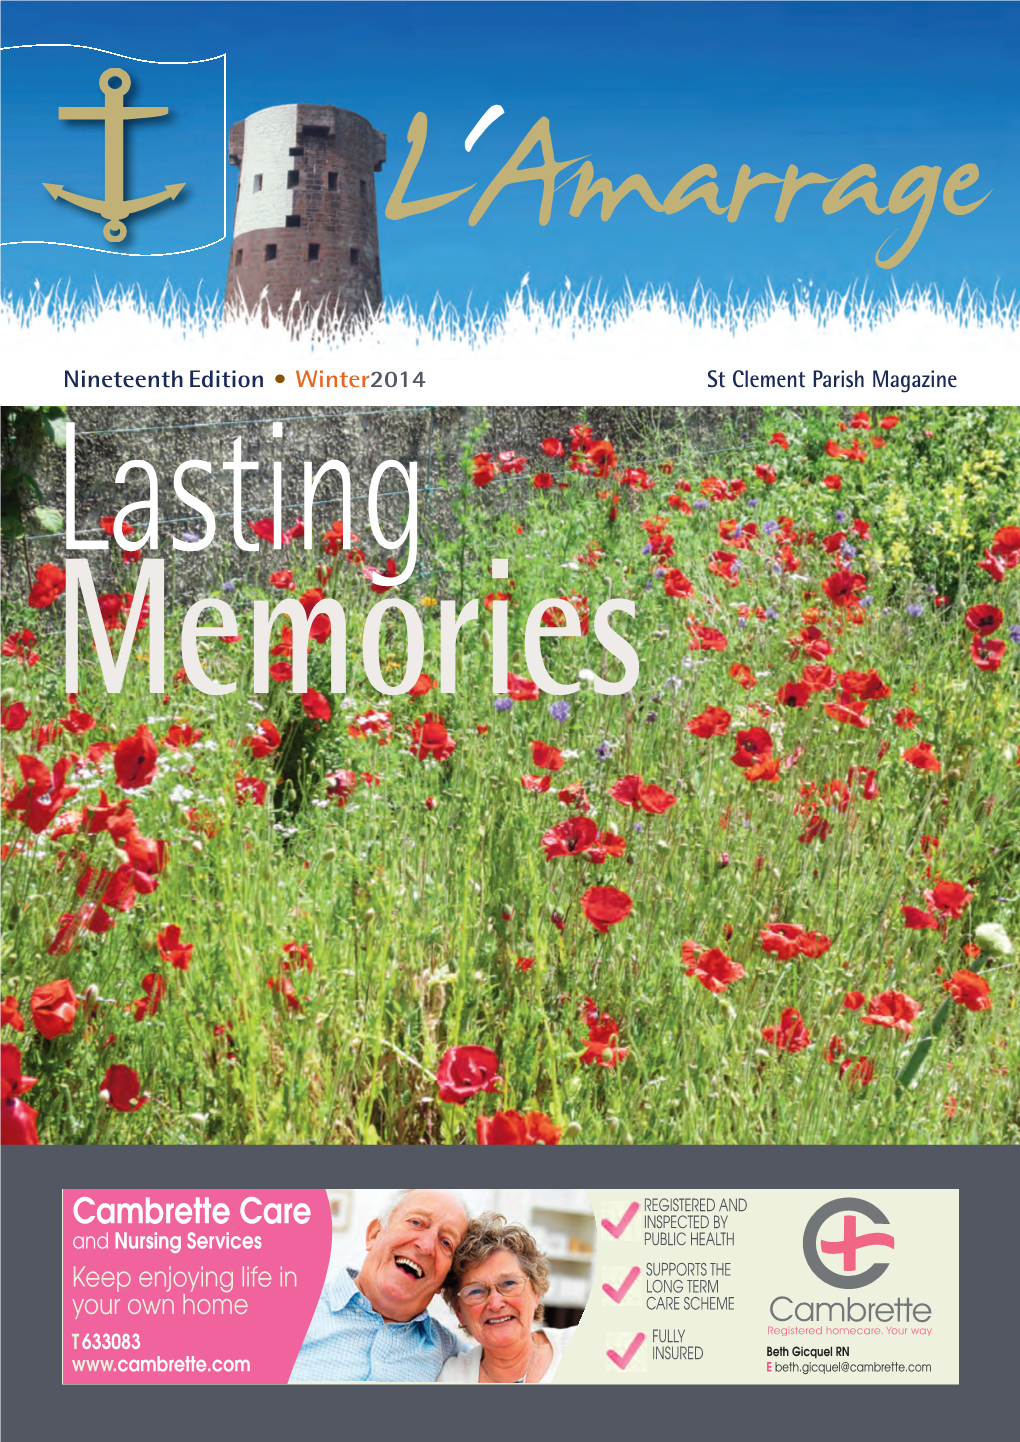 Nineteenth Edition • Winter2014 St Clement Parish Magazine Lasting Memories